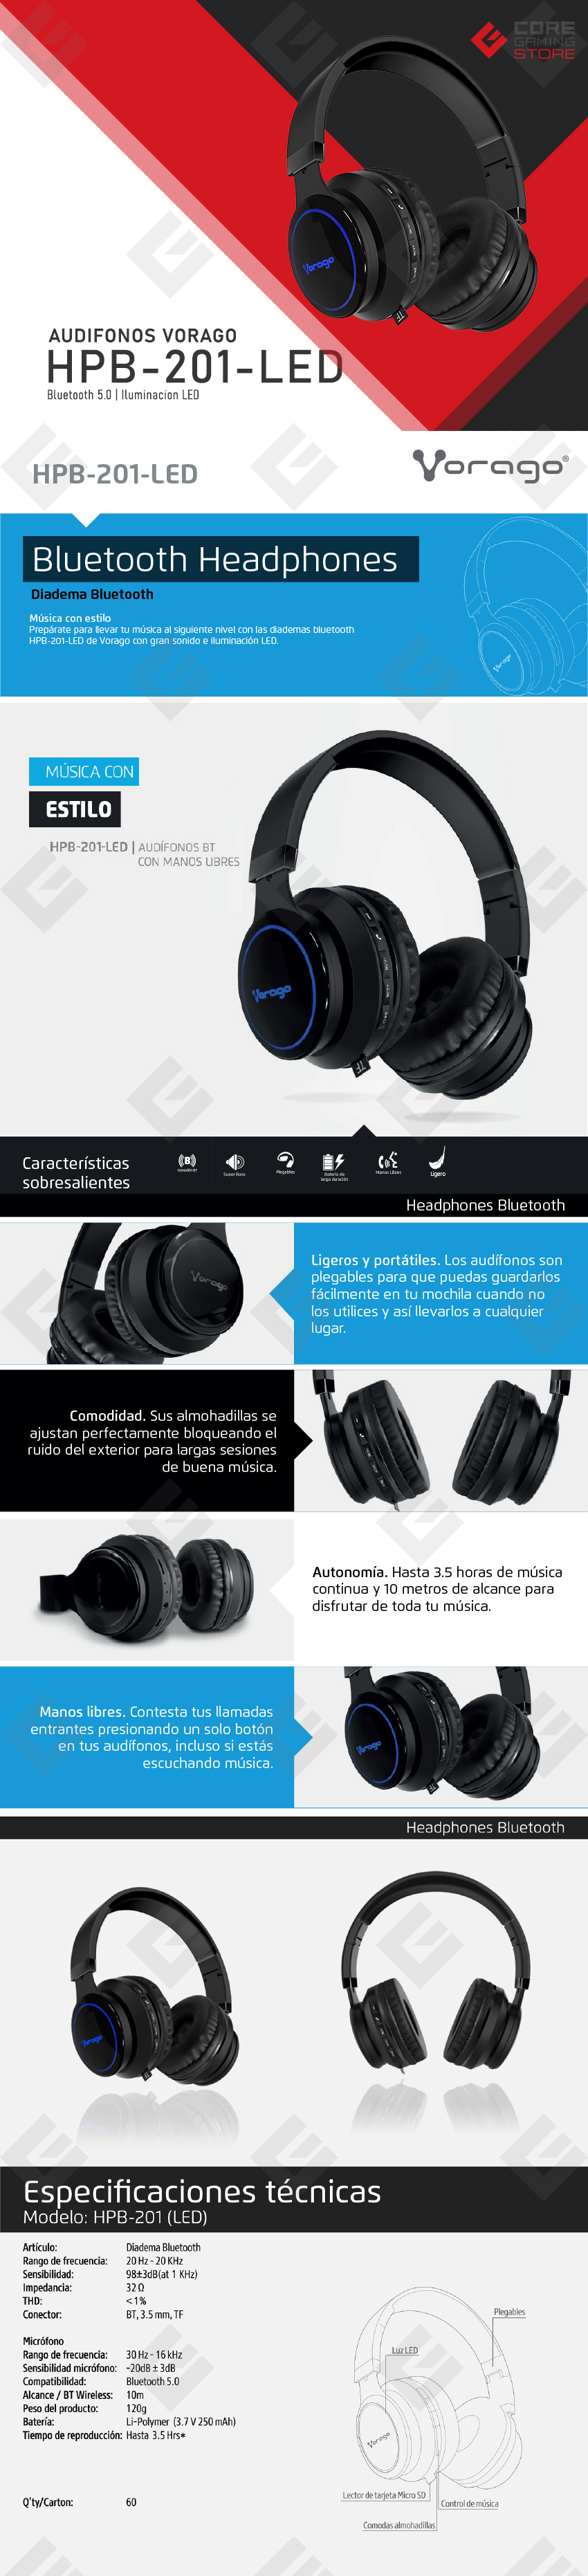 Audifonos Vorago HPB-201-LED | Bluetooth 5.0 | 3.5mm | Manos libres